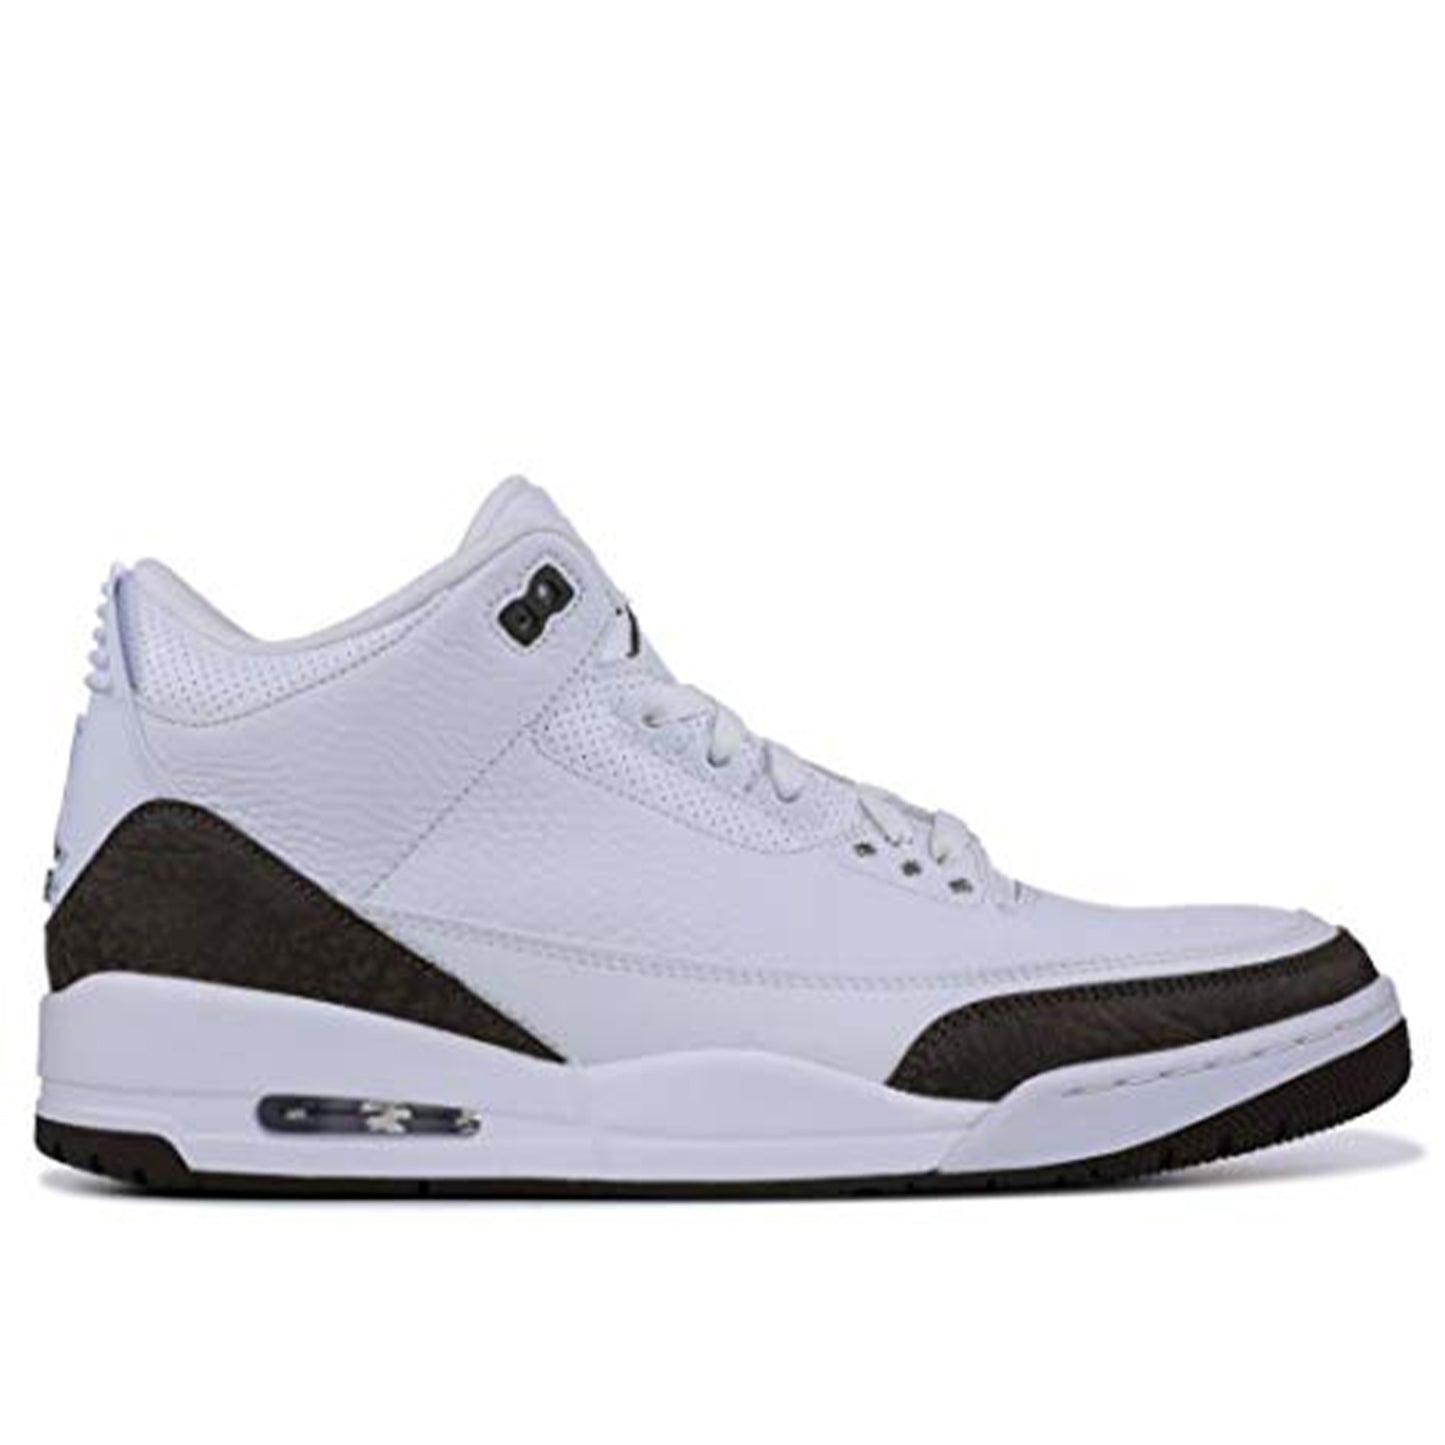 Nike Men's Air Jordan 3 Retro Mocha Size 8 - 136064-122 White/Dark Mocha-Chrome